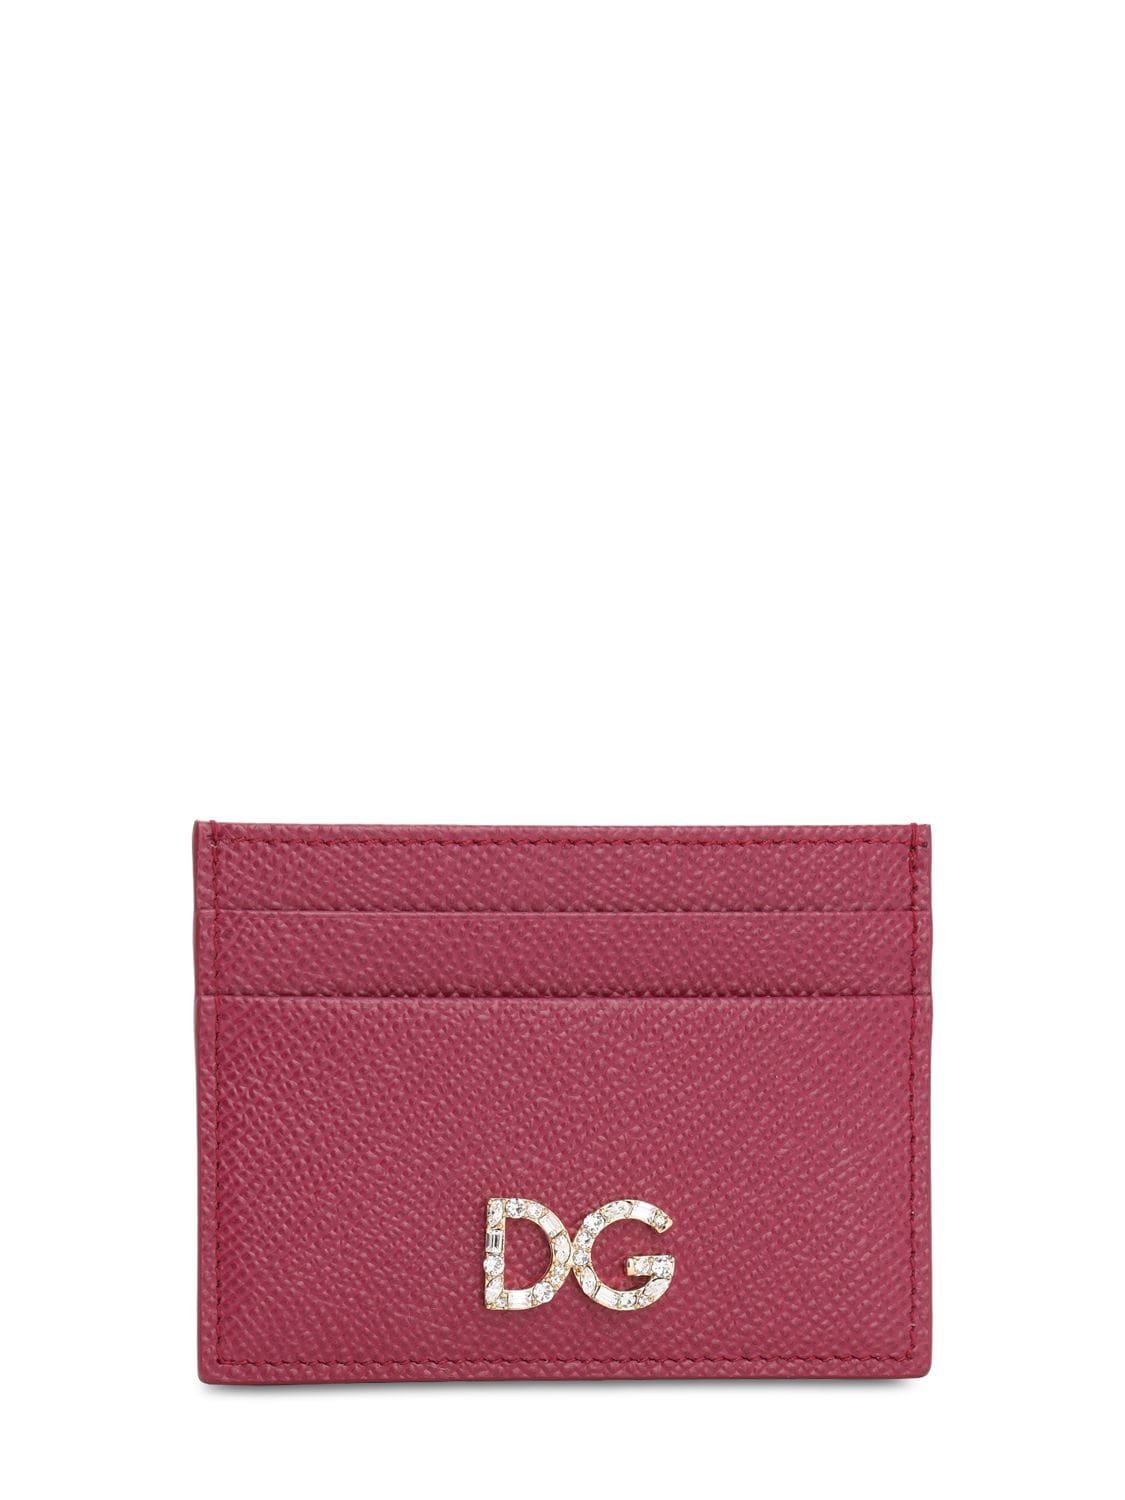 Dolce & Gabbana Dauphine Leather Card Holder In Fuchsia